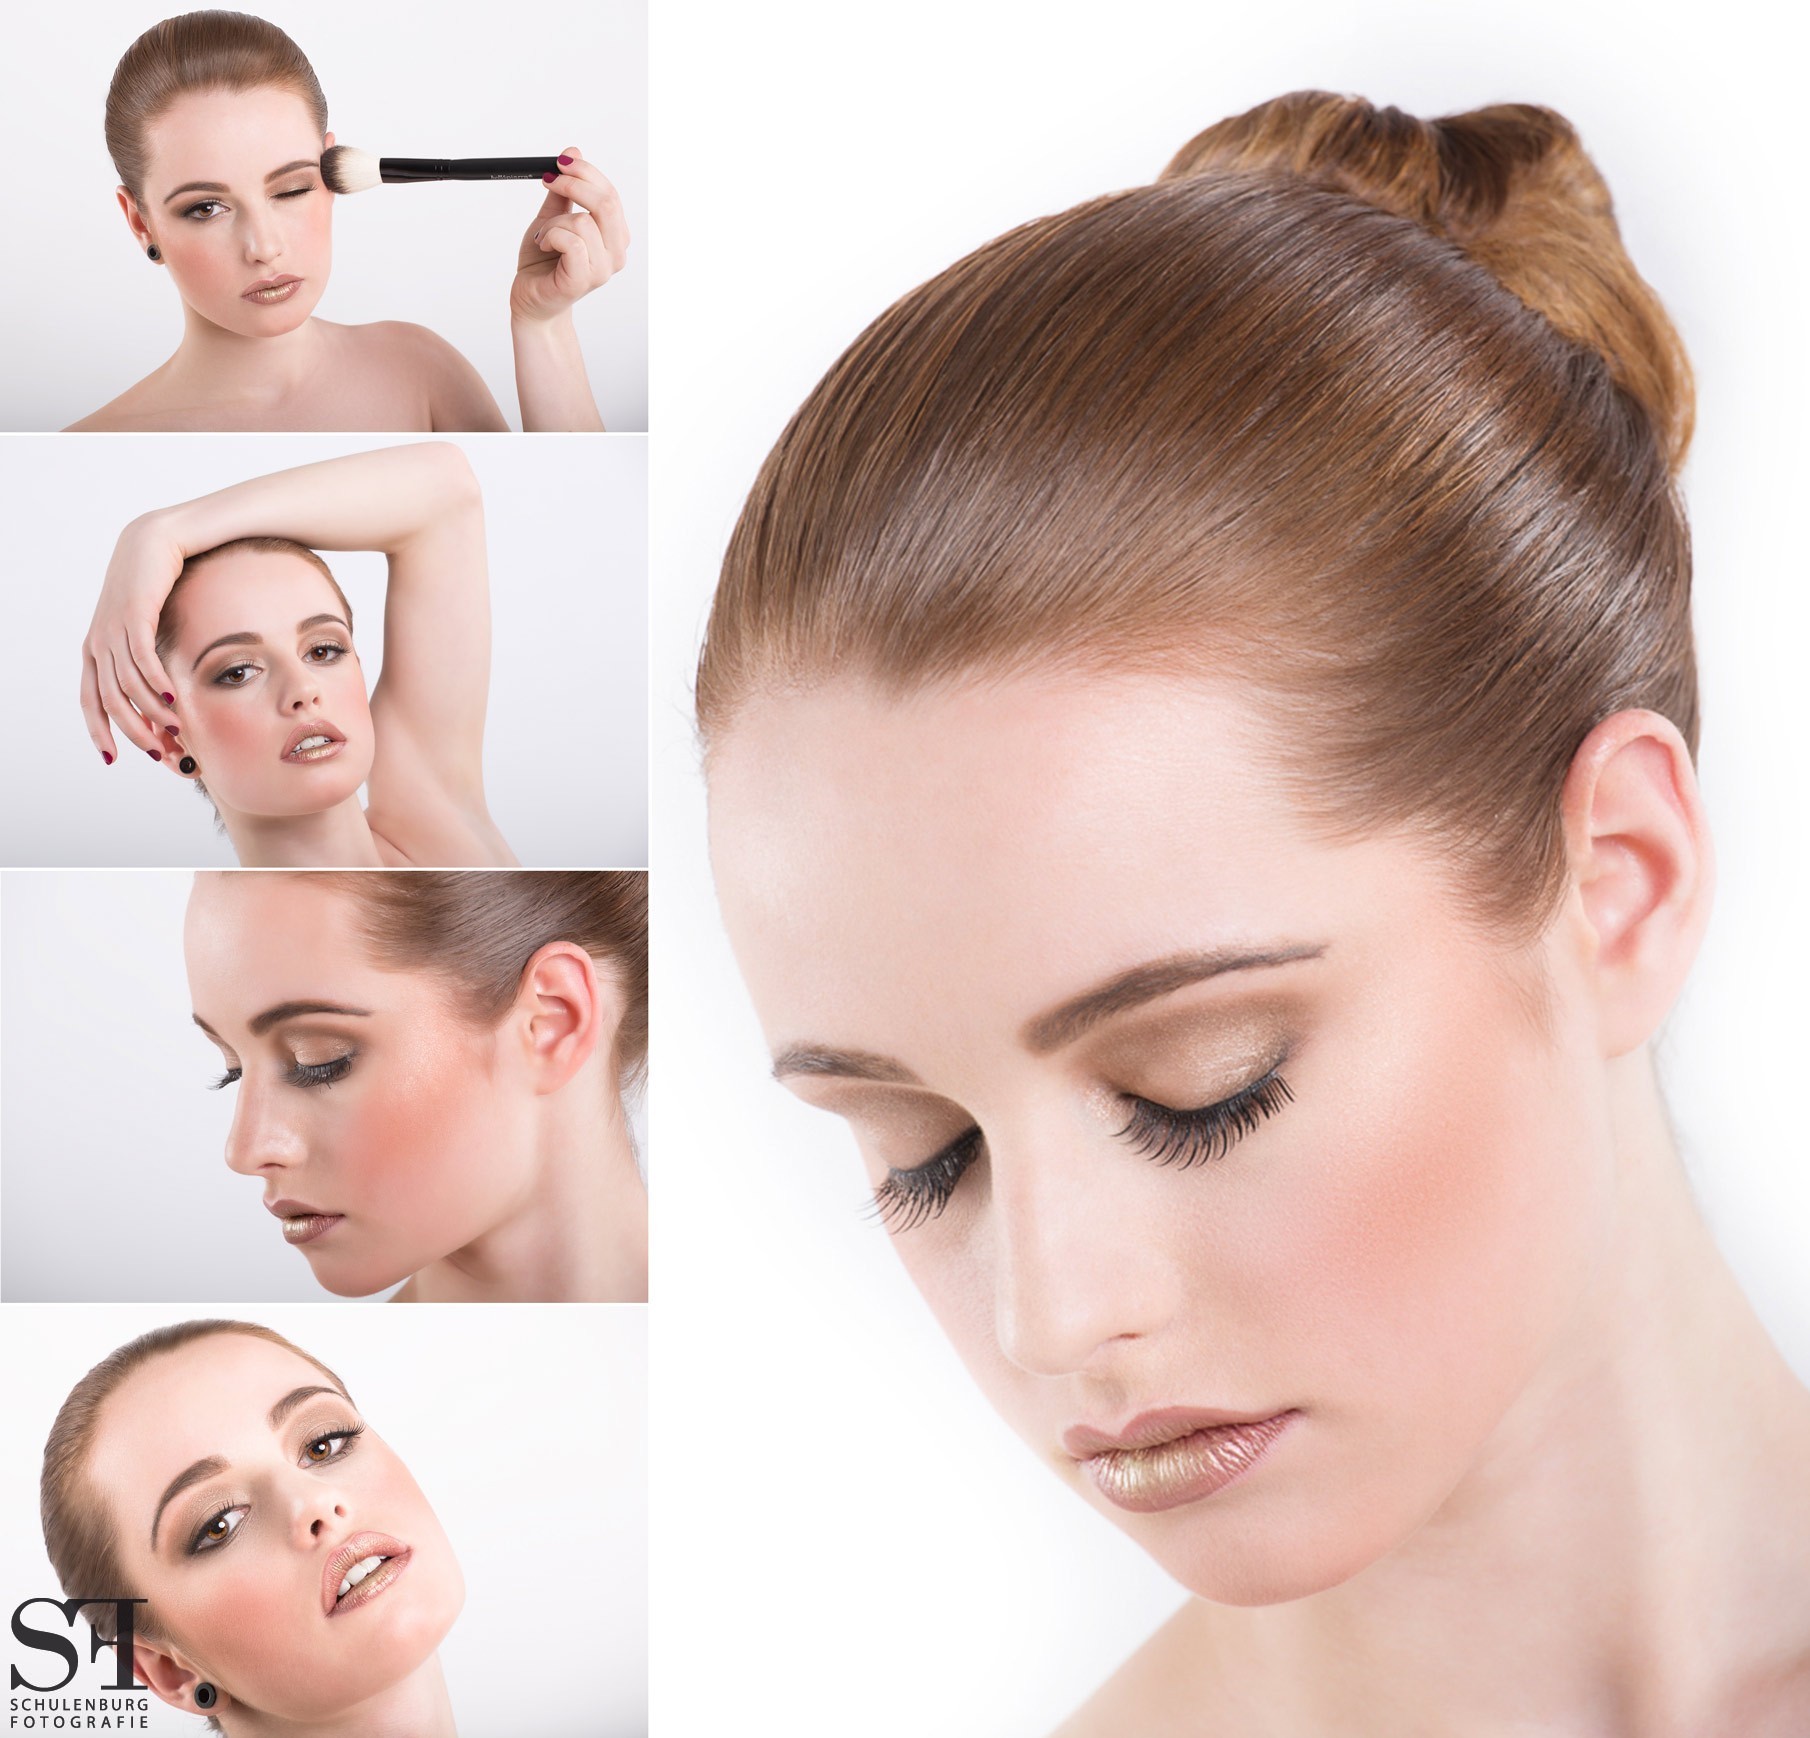 Fotograf: Henry Schulenburg, Hair &amp; Make-up: <b>Anja Rühl</b>, Model: Elisa M. ... - beauty-2-2-col